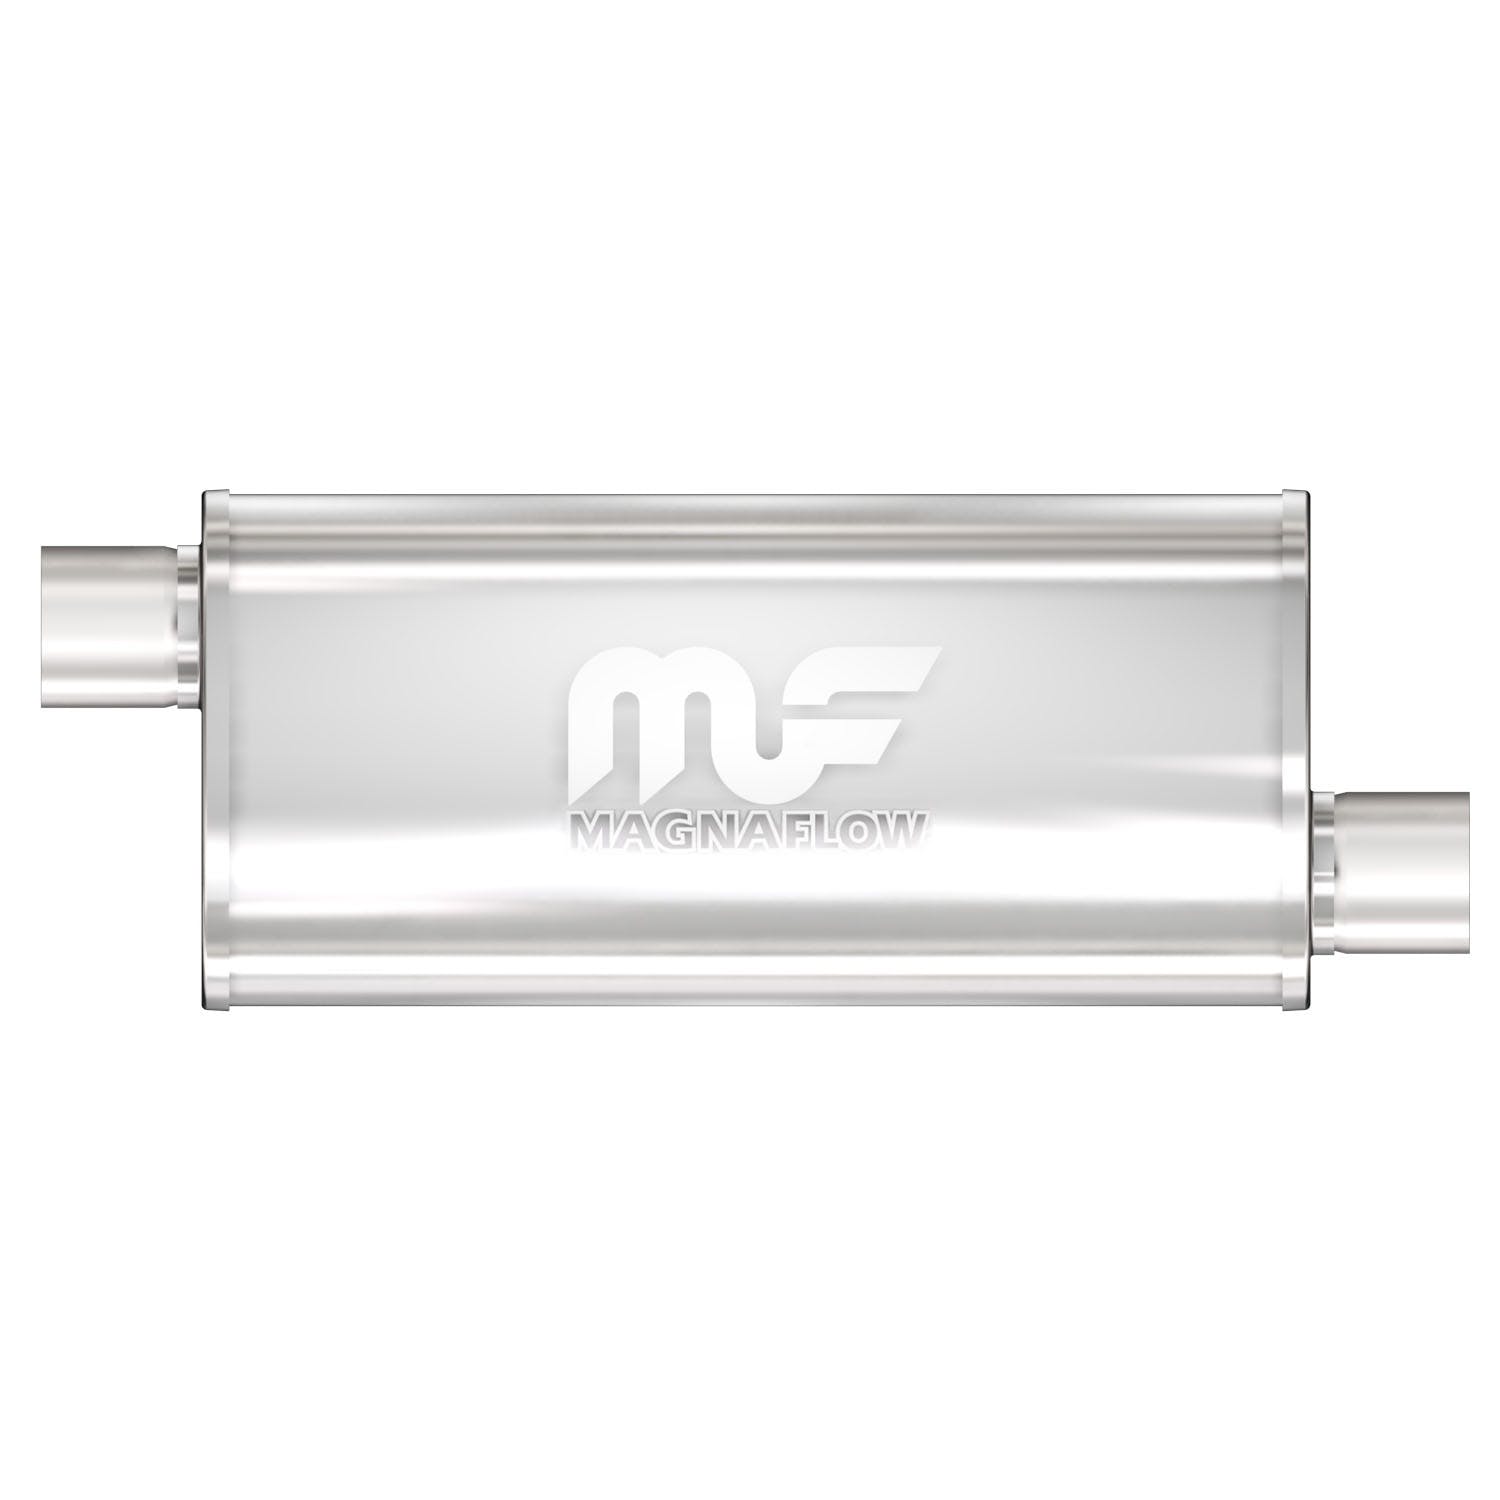 MagnaFlow Exhaust Products 14264 Universal Muffler